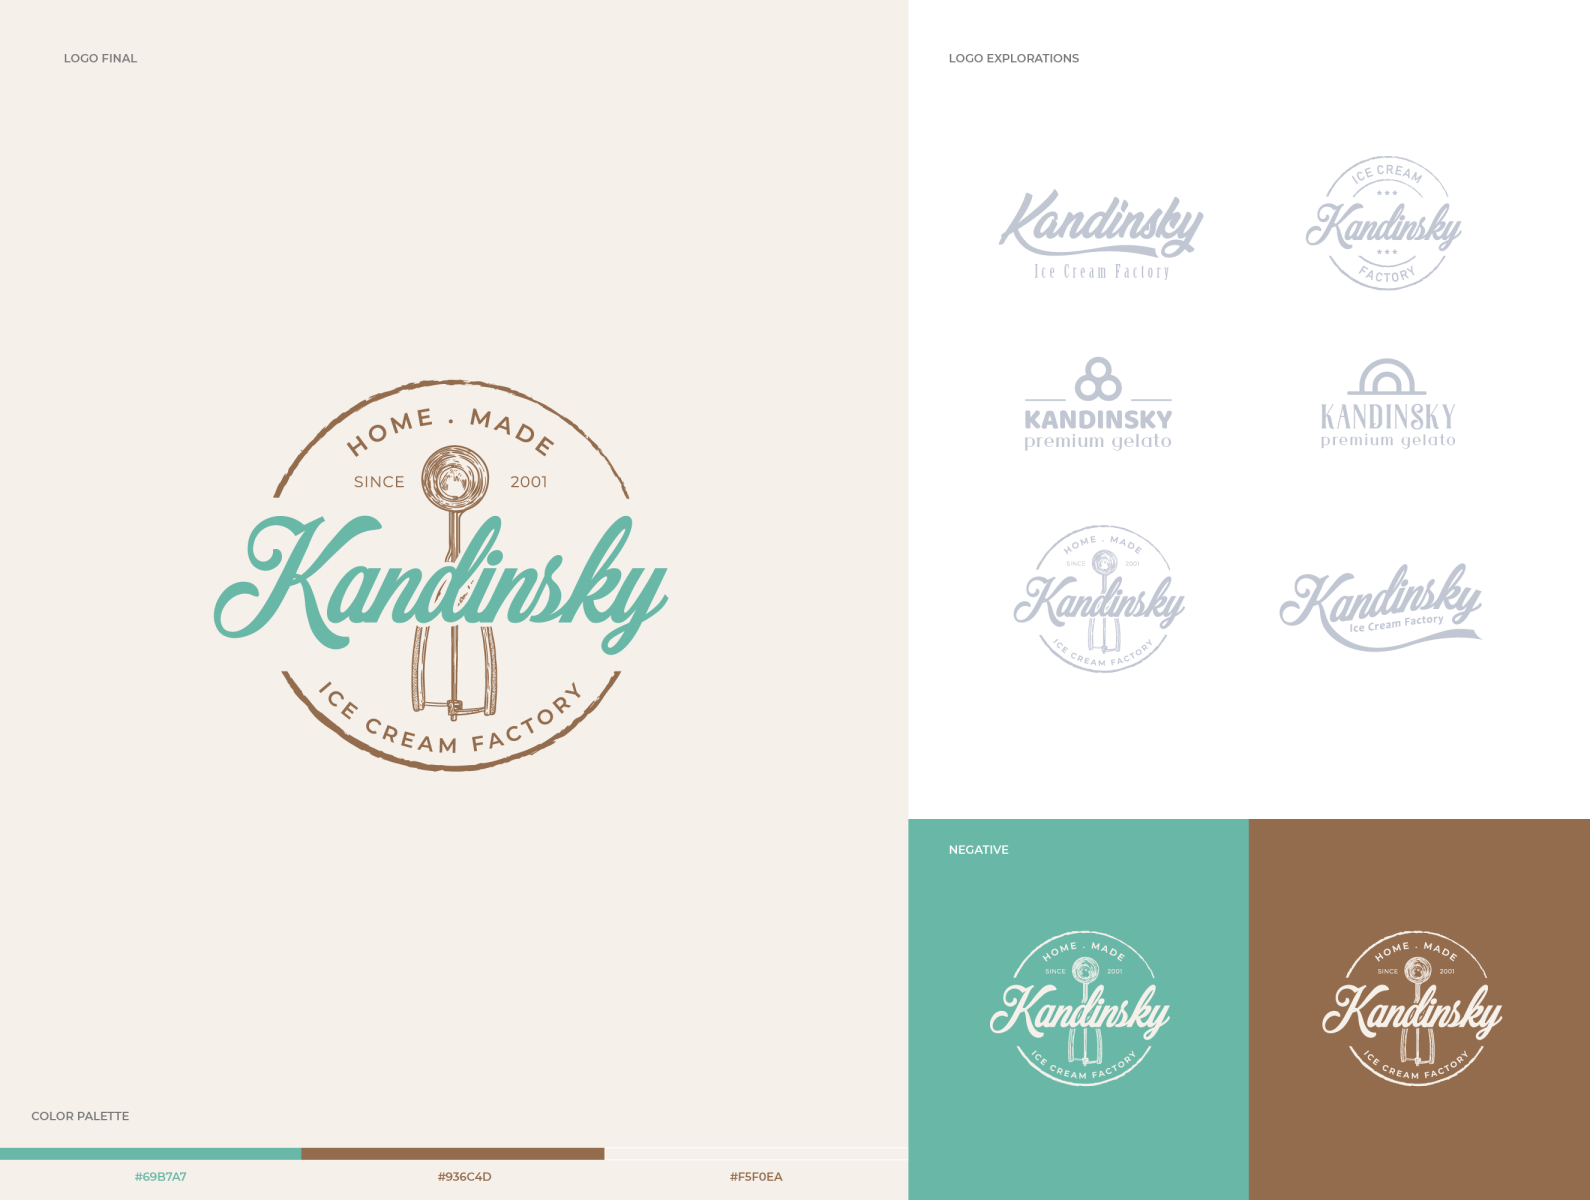 Logo Kandisky - ice cream factory by Ilyas Frih on Dribbble